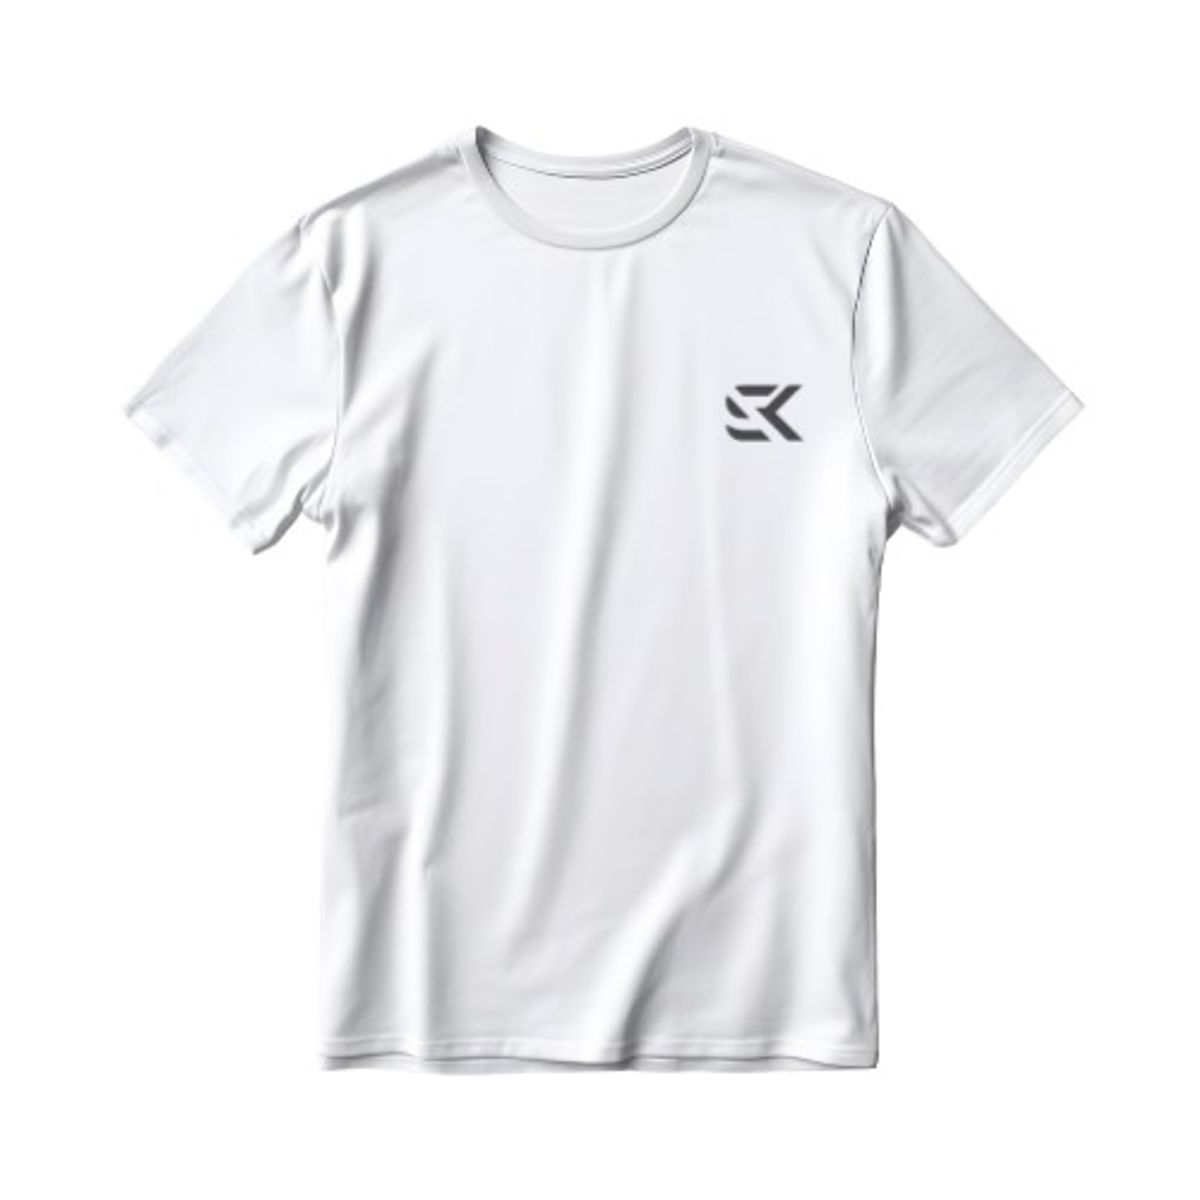 Nome do produto: Camisa branca - skitz